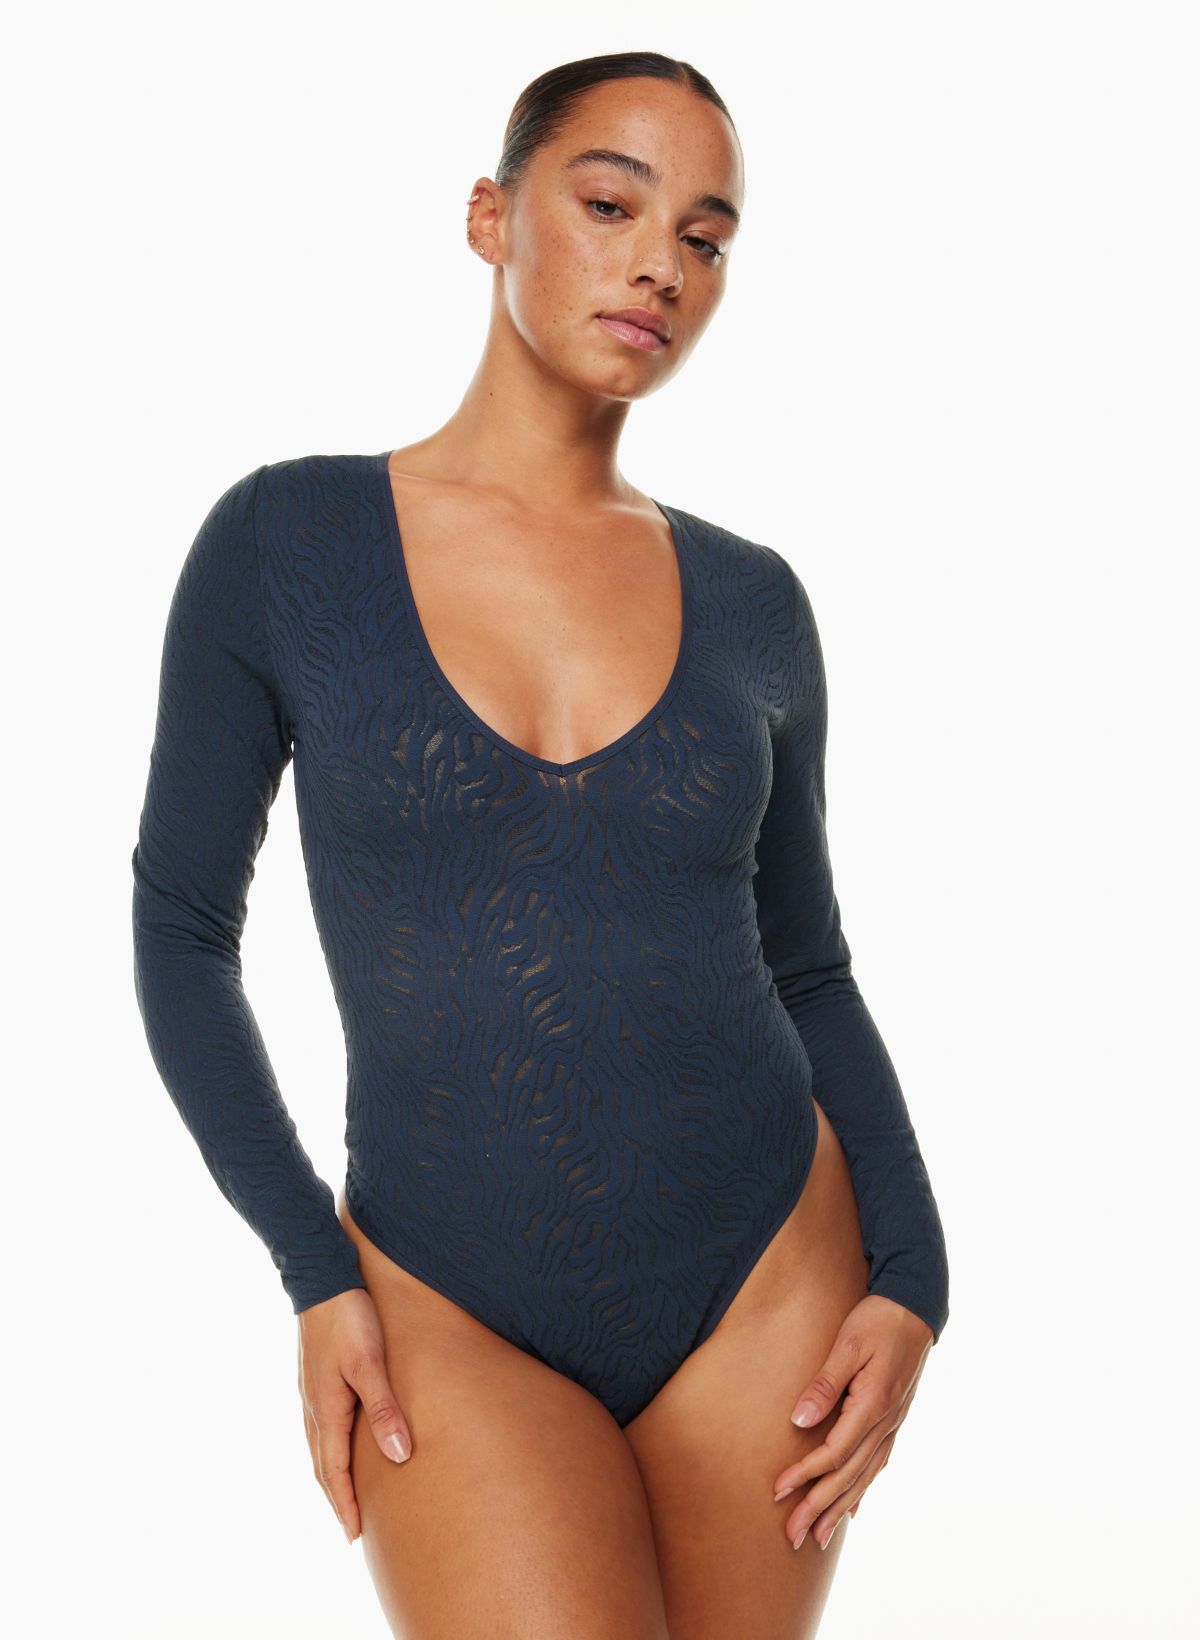 Black Minimalist Solid Form Fitting Bodysuit Casual Deep V Neck Short  Sleeve Skinny Bodysuit Women Summer Tshirt Bodysuits S 3XL J1905113 From  Janet1221, $13.27